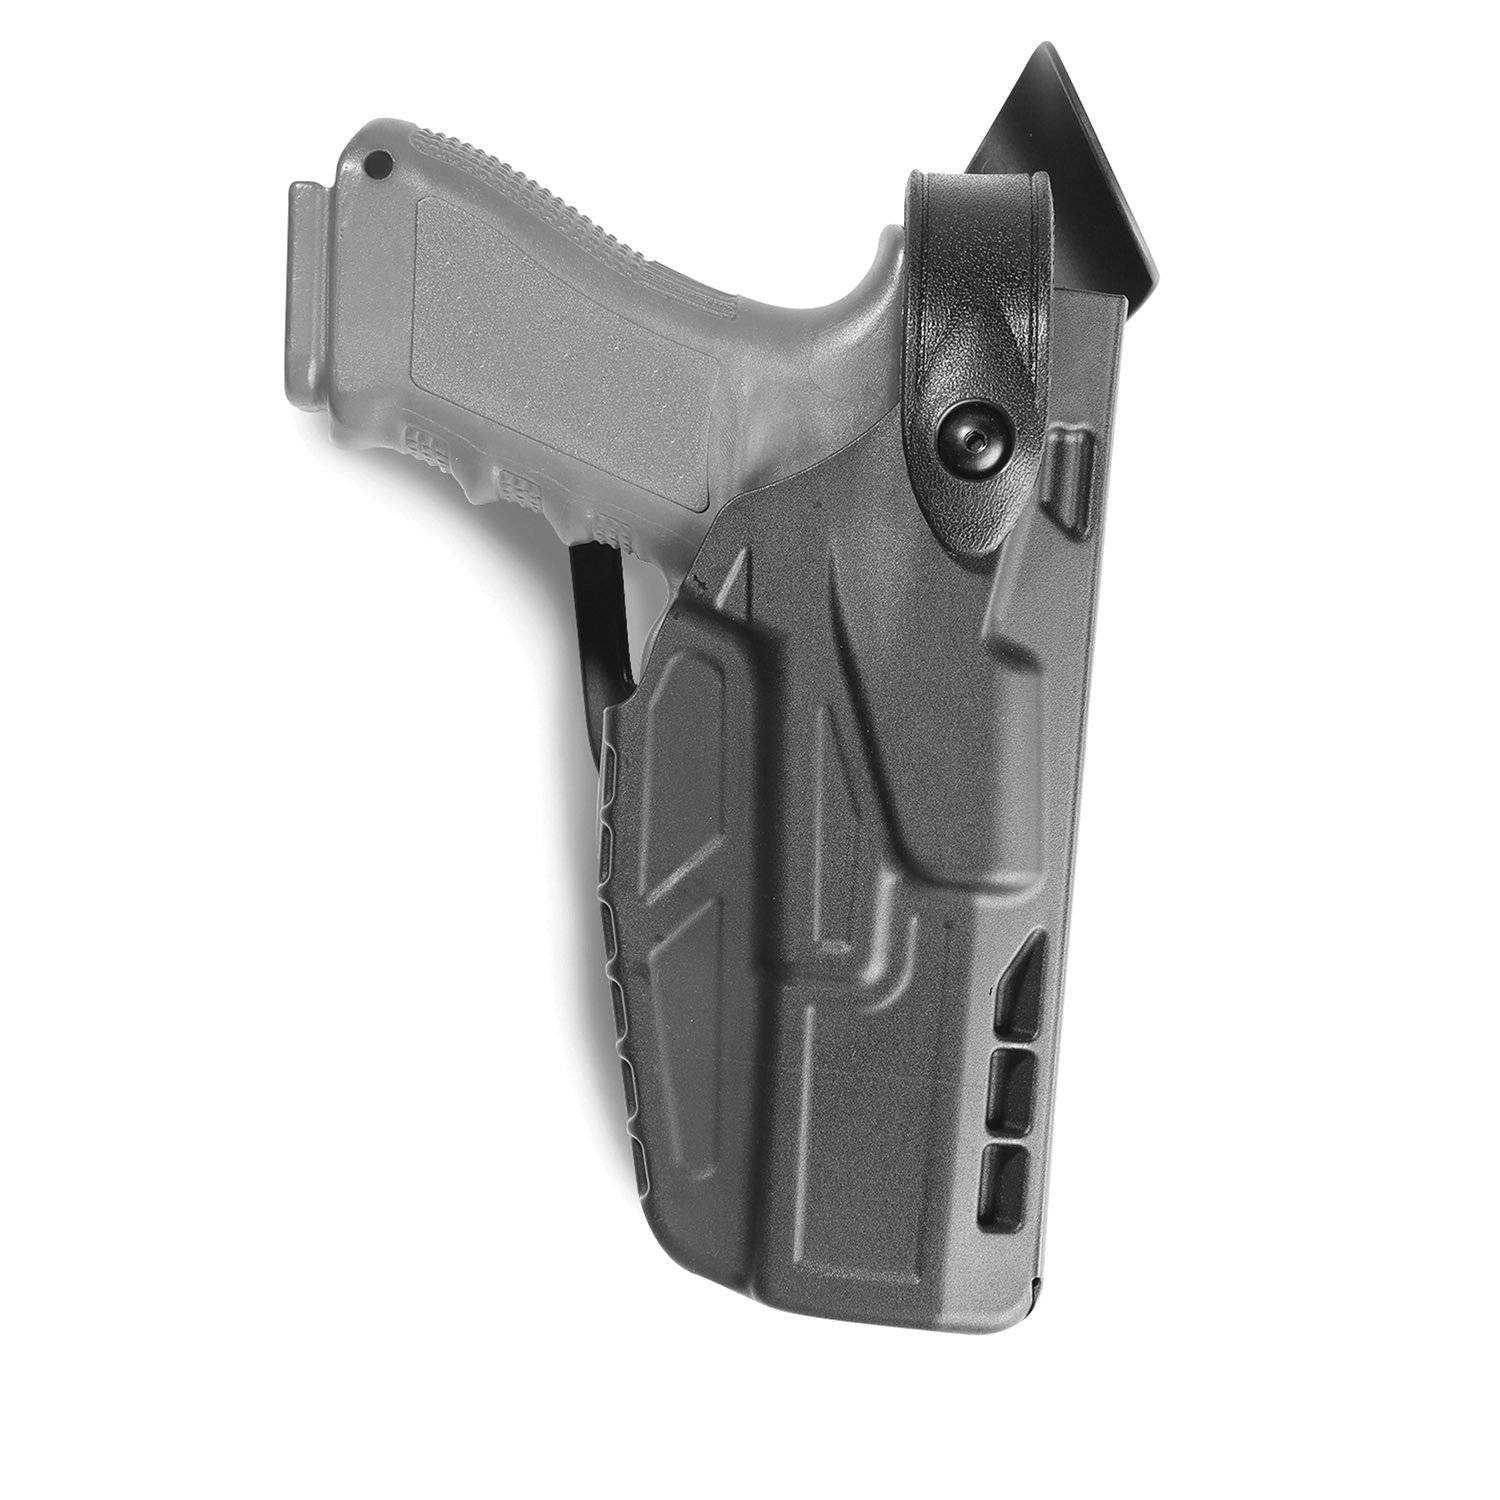 Safariland 7360-283-411 Mid-Ride Duty Holster STX Plain RH Fits Glock 19